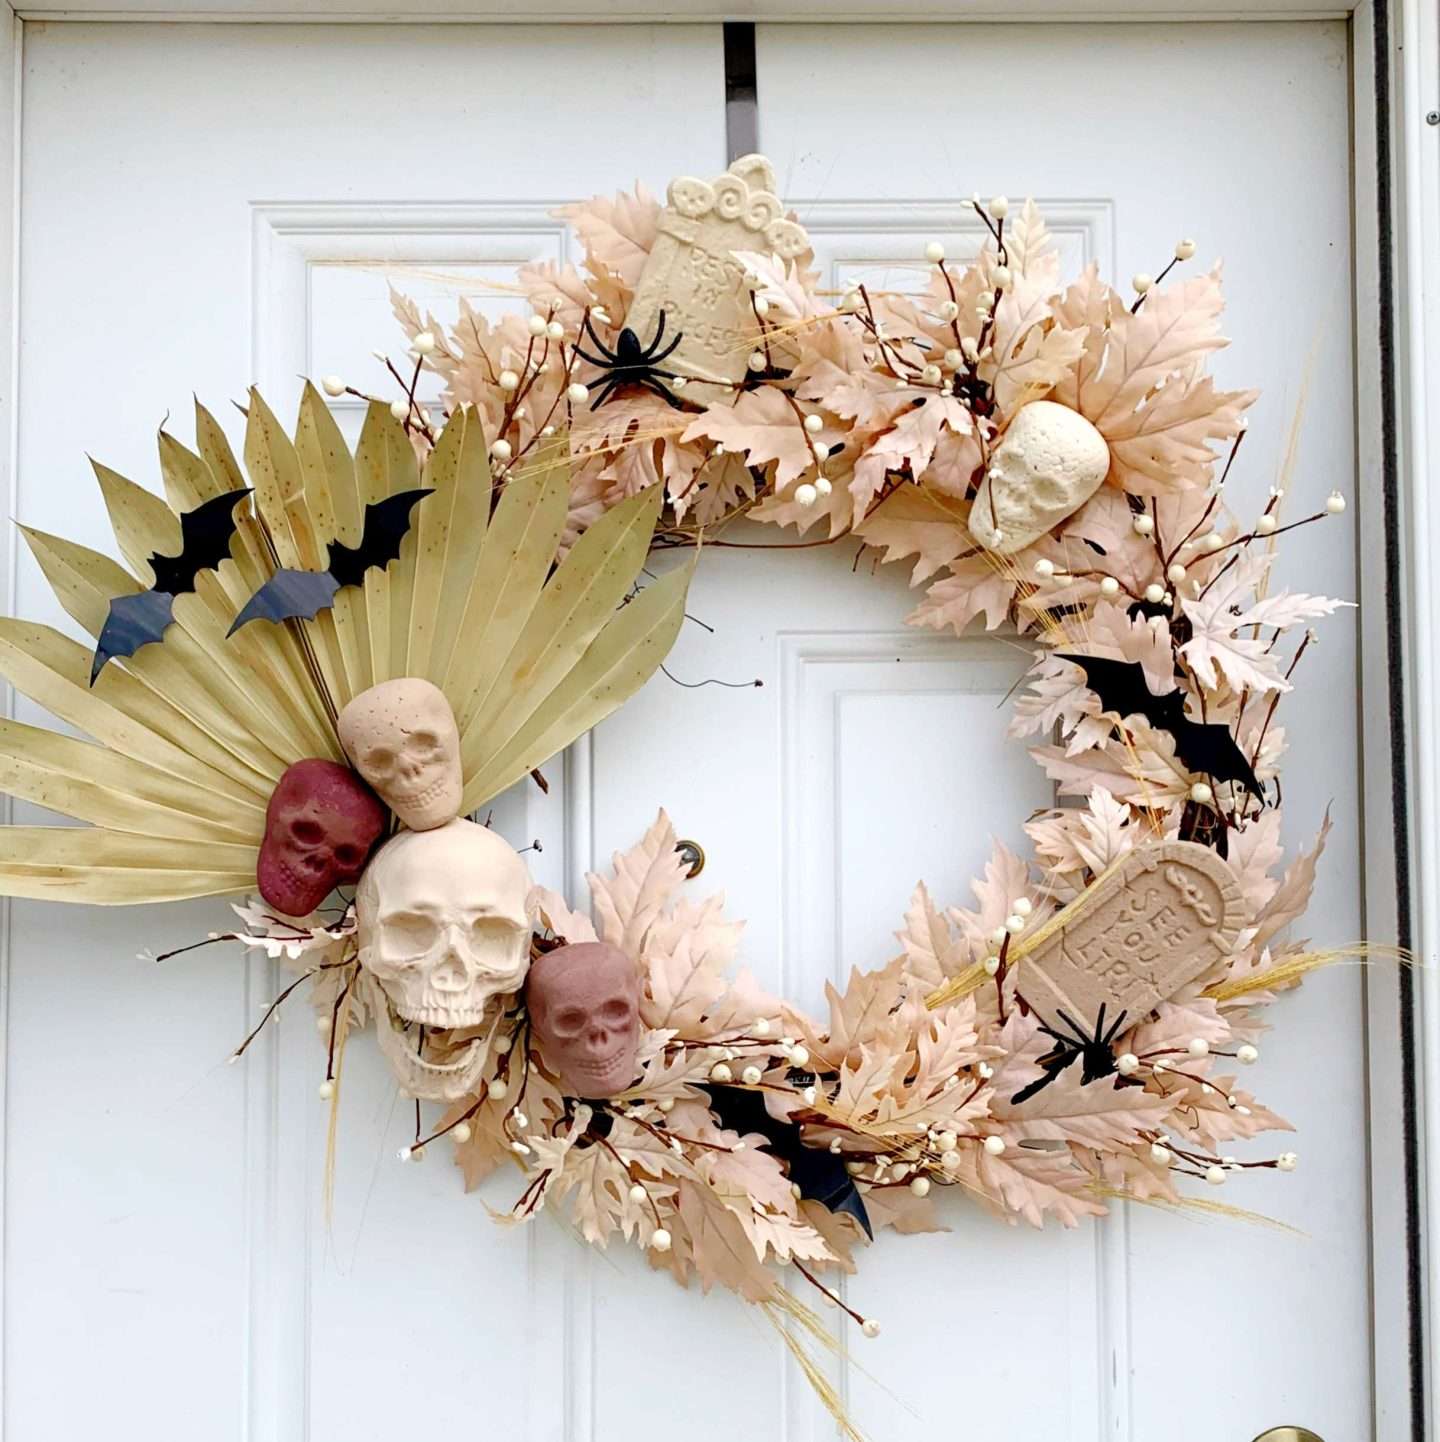 The finished DIY Boho Halloween Wreath!